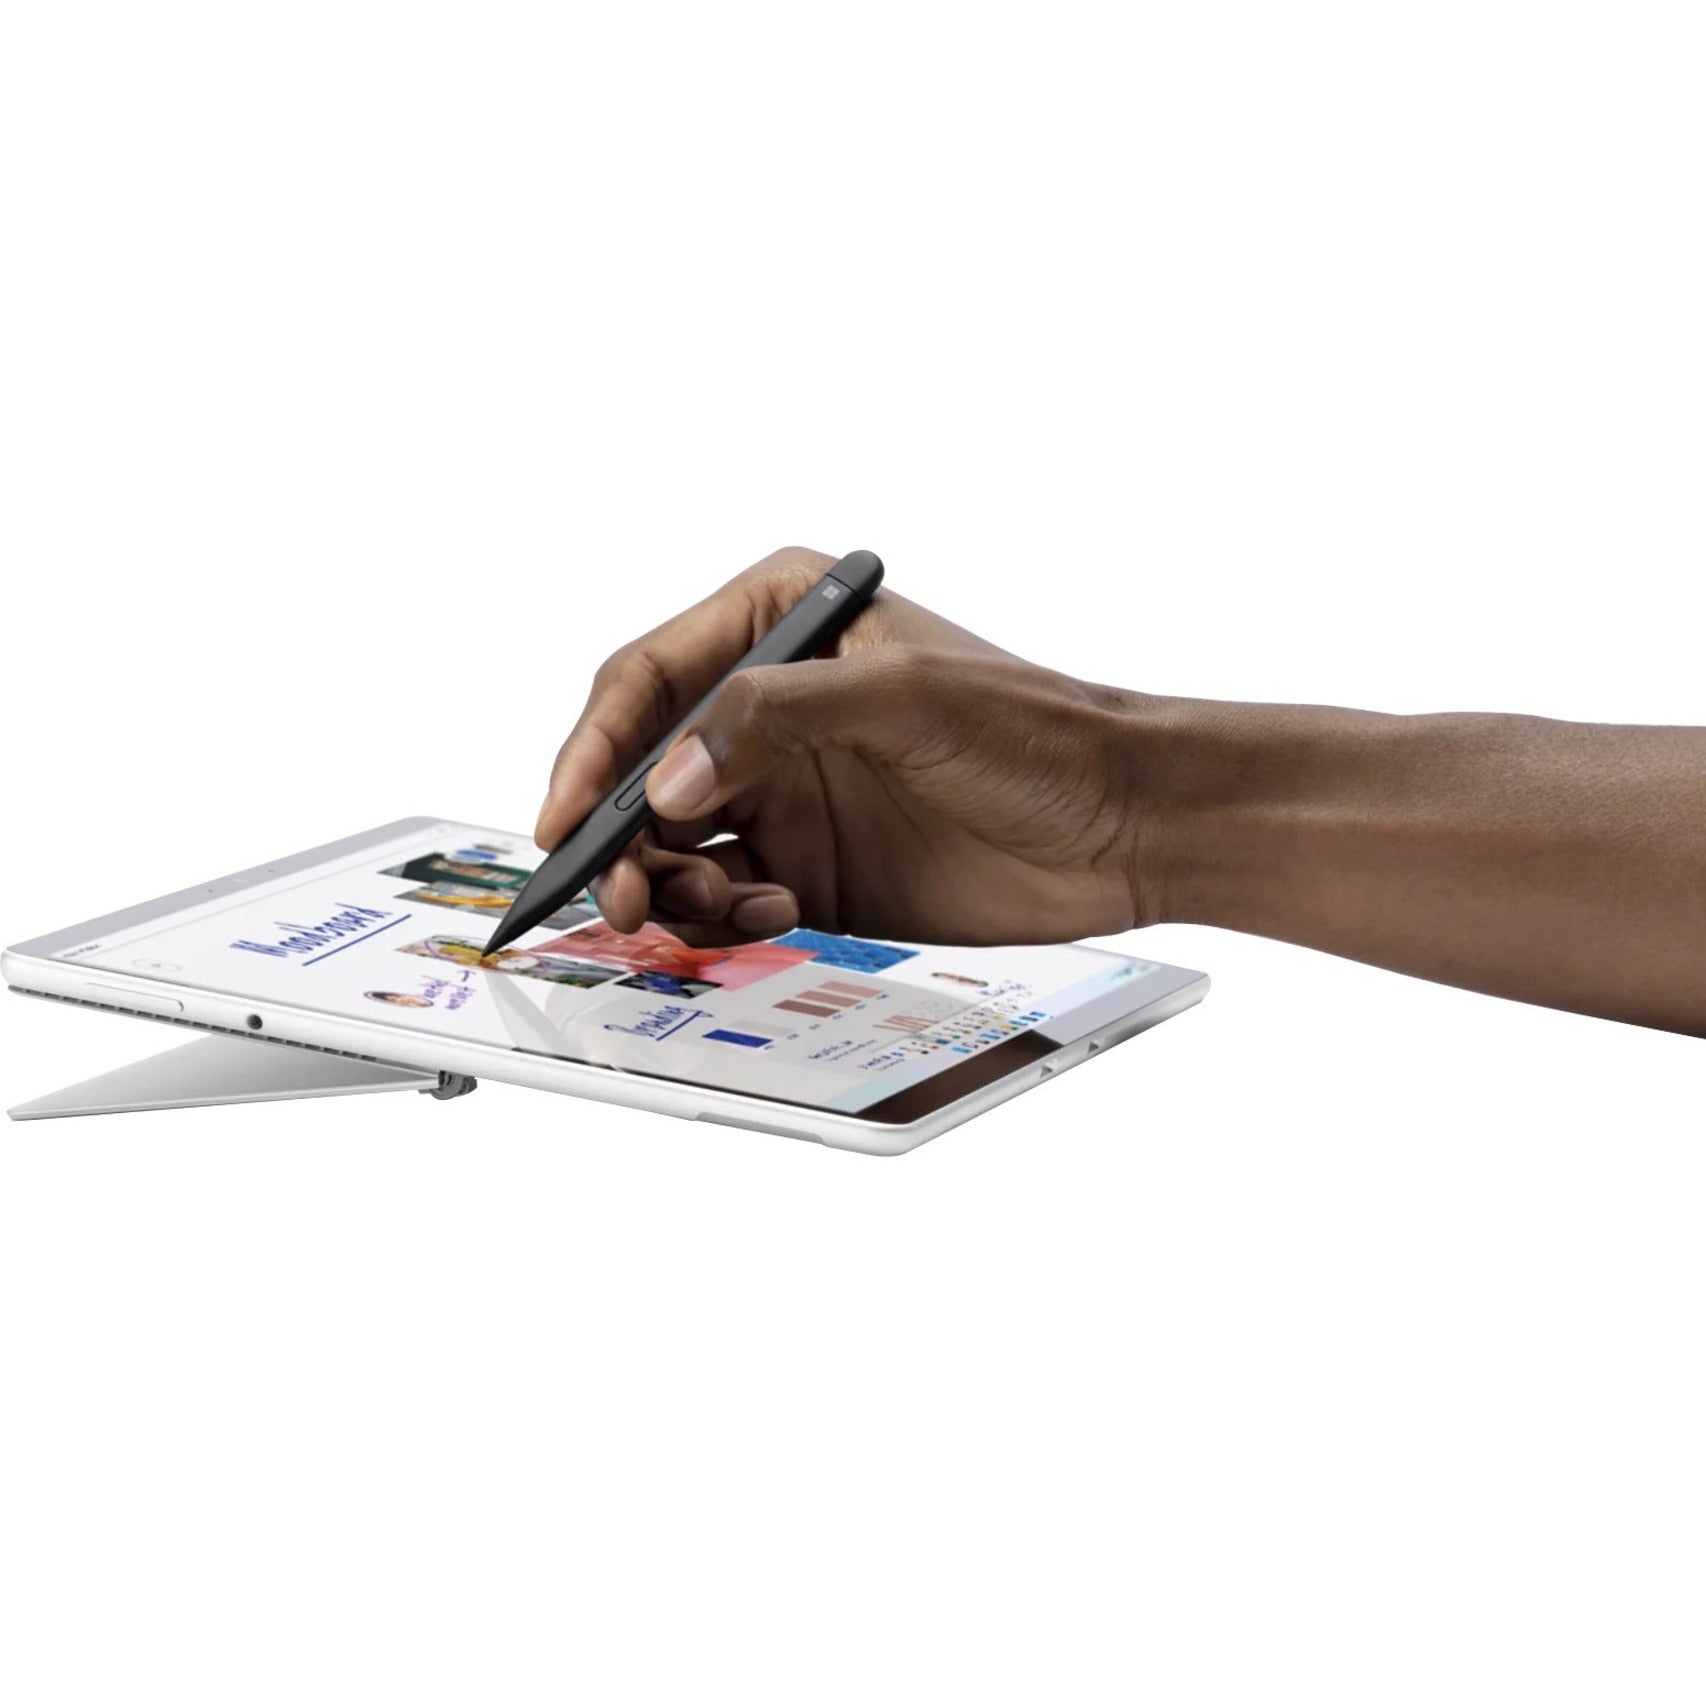 Microsoft 8WX-00001 Surface Slim Pen 2 Stylus Bluetooth 4096 Druckstufen 15 Stunden Akkulaufzeit